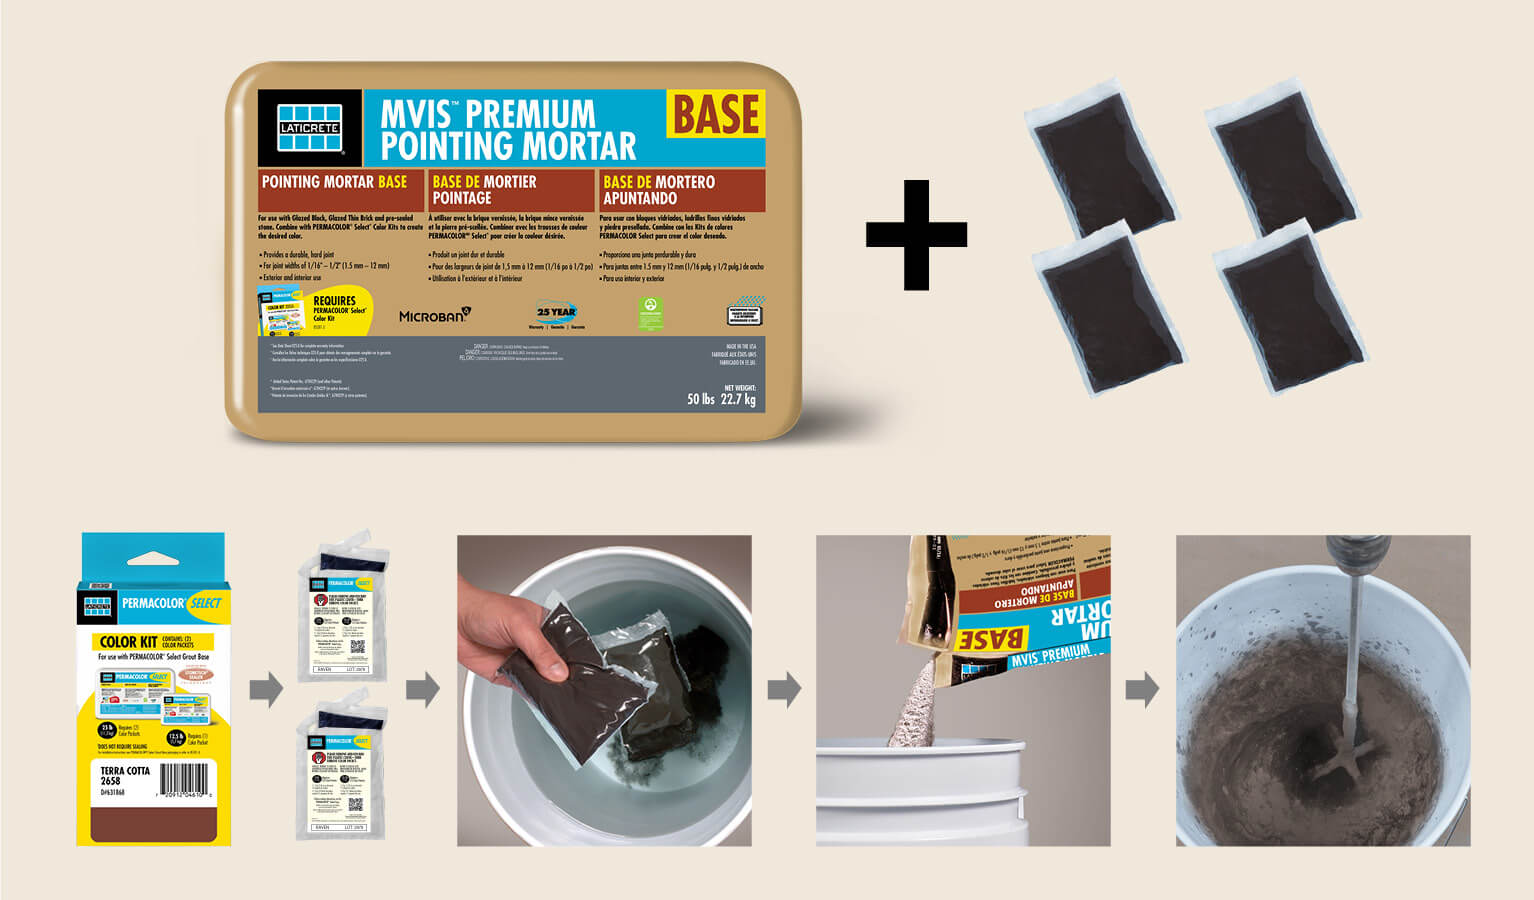 How to Use LATICRETE MVIS Premium Pointing Mortar